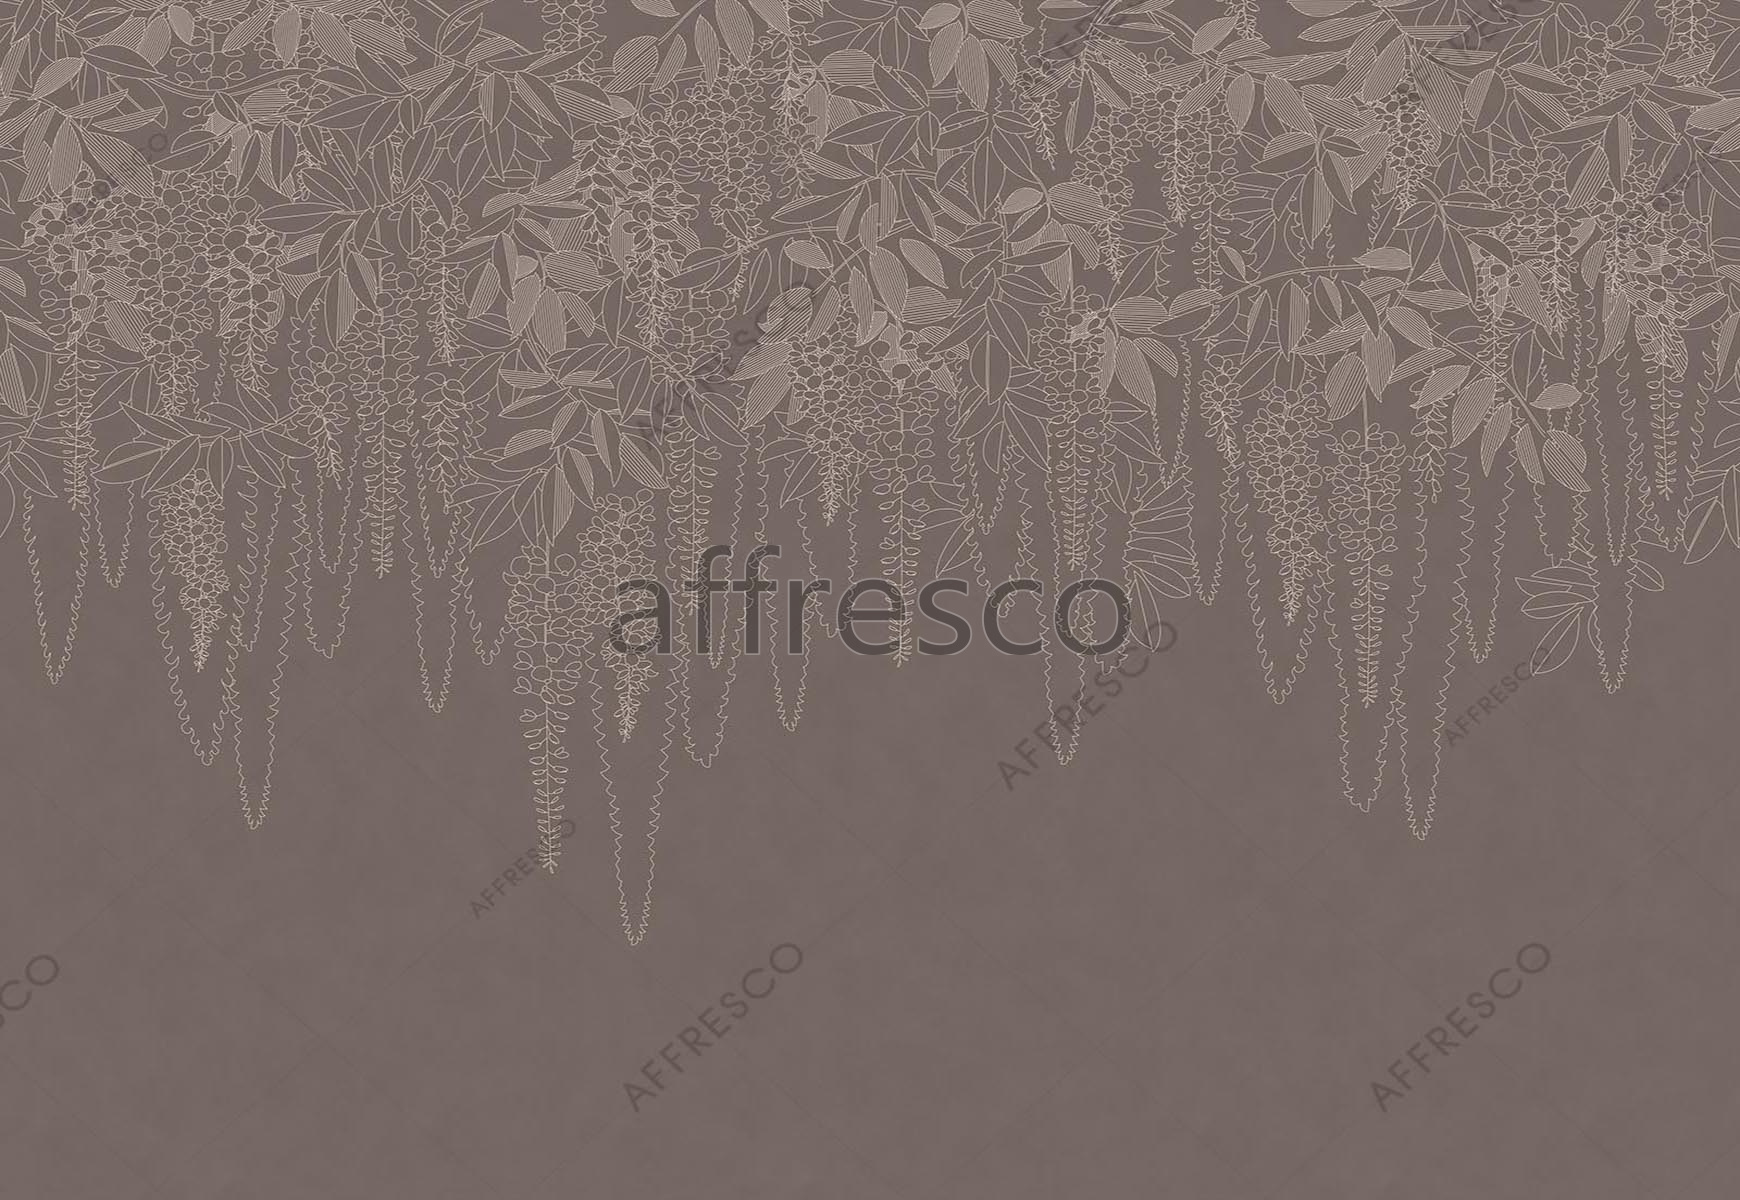 ID139201 | Forest | Miami Flowers | Affresco Factory